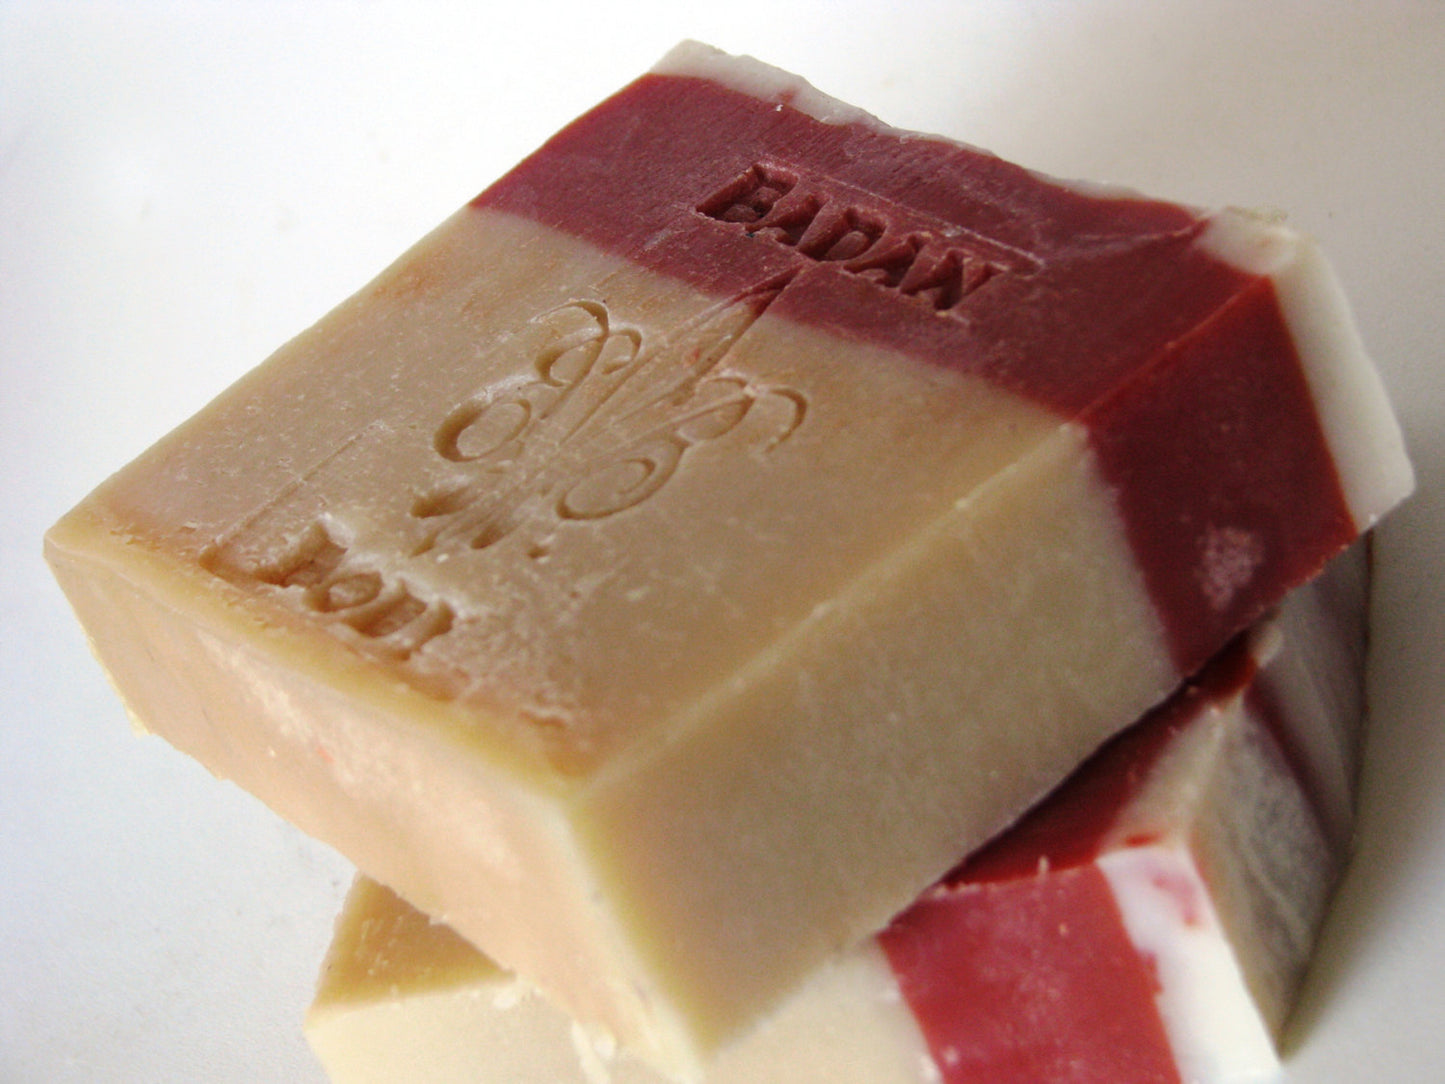 Fresh Raspberry Soap - Natural Handmade Soap, Shea Butter Soap, Moisturizing Soap Limited Edition - BadanBody